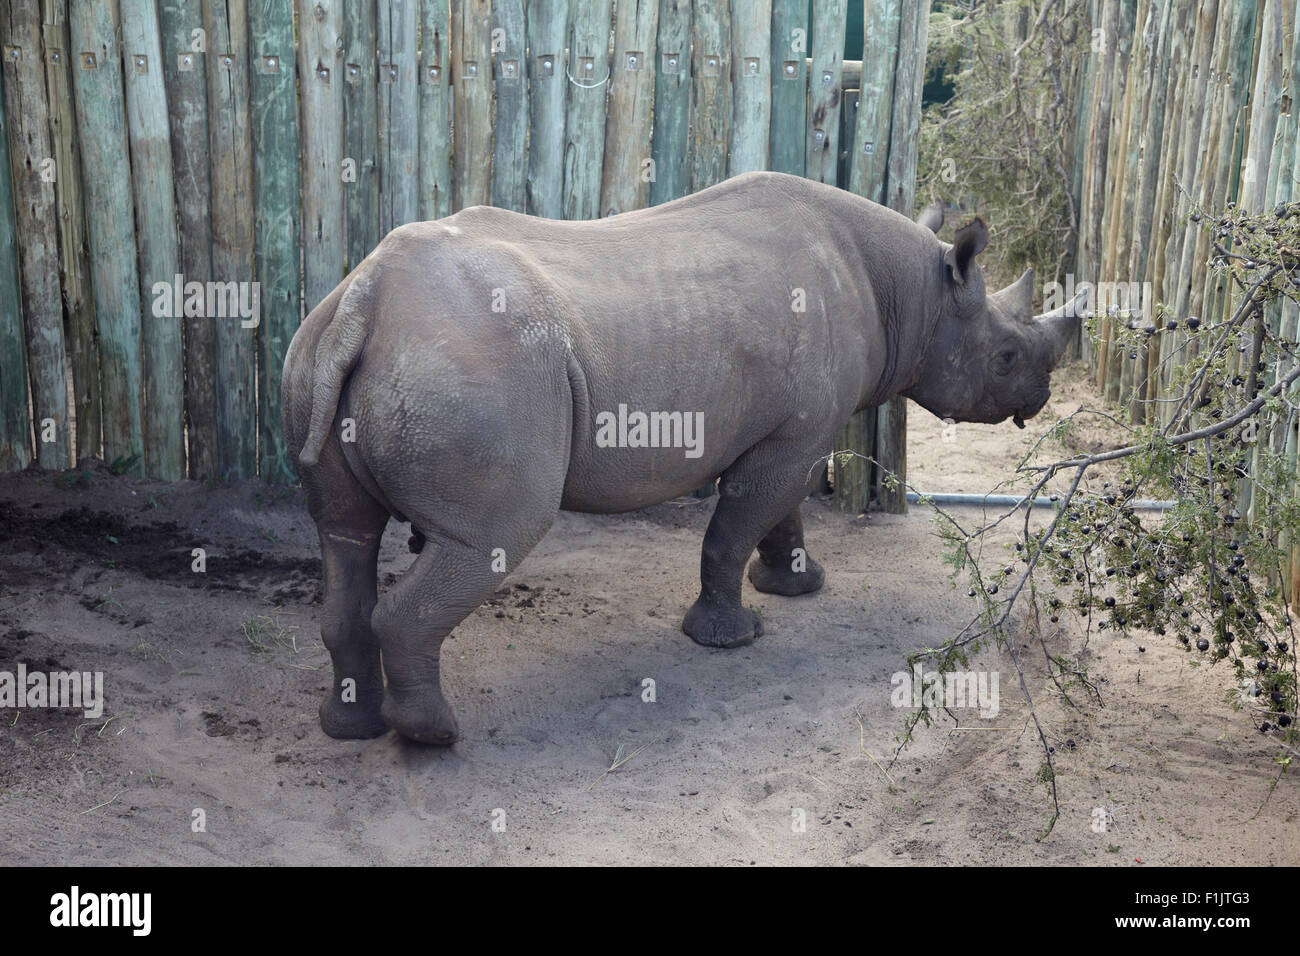 Michaeli species of rhinos, rhino relocation programme, Singita Grumeti, Tanzania Stock Photo